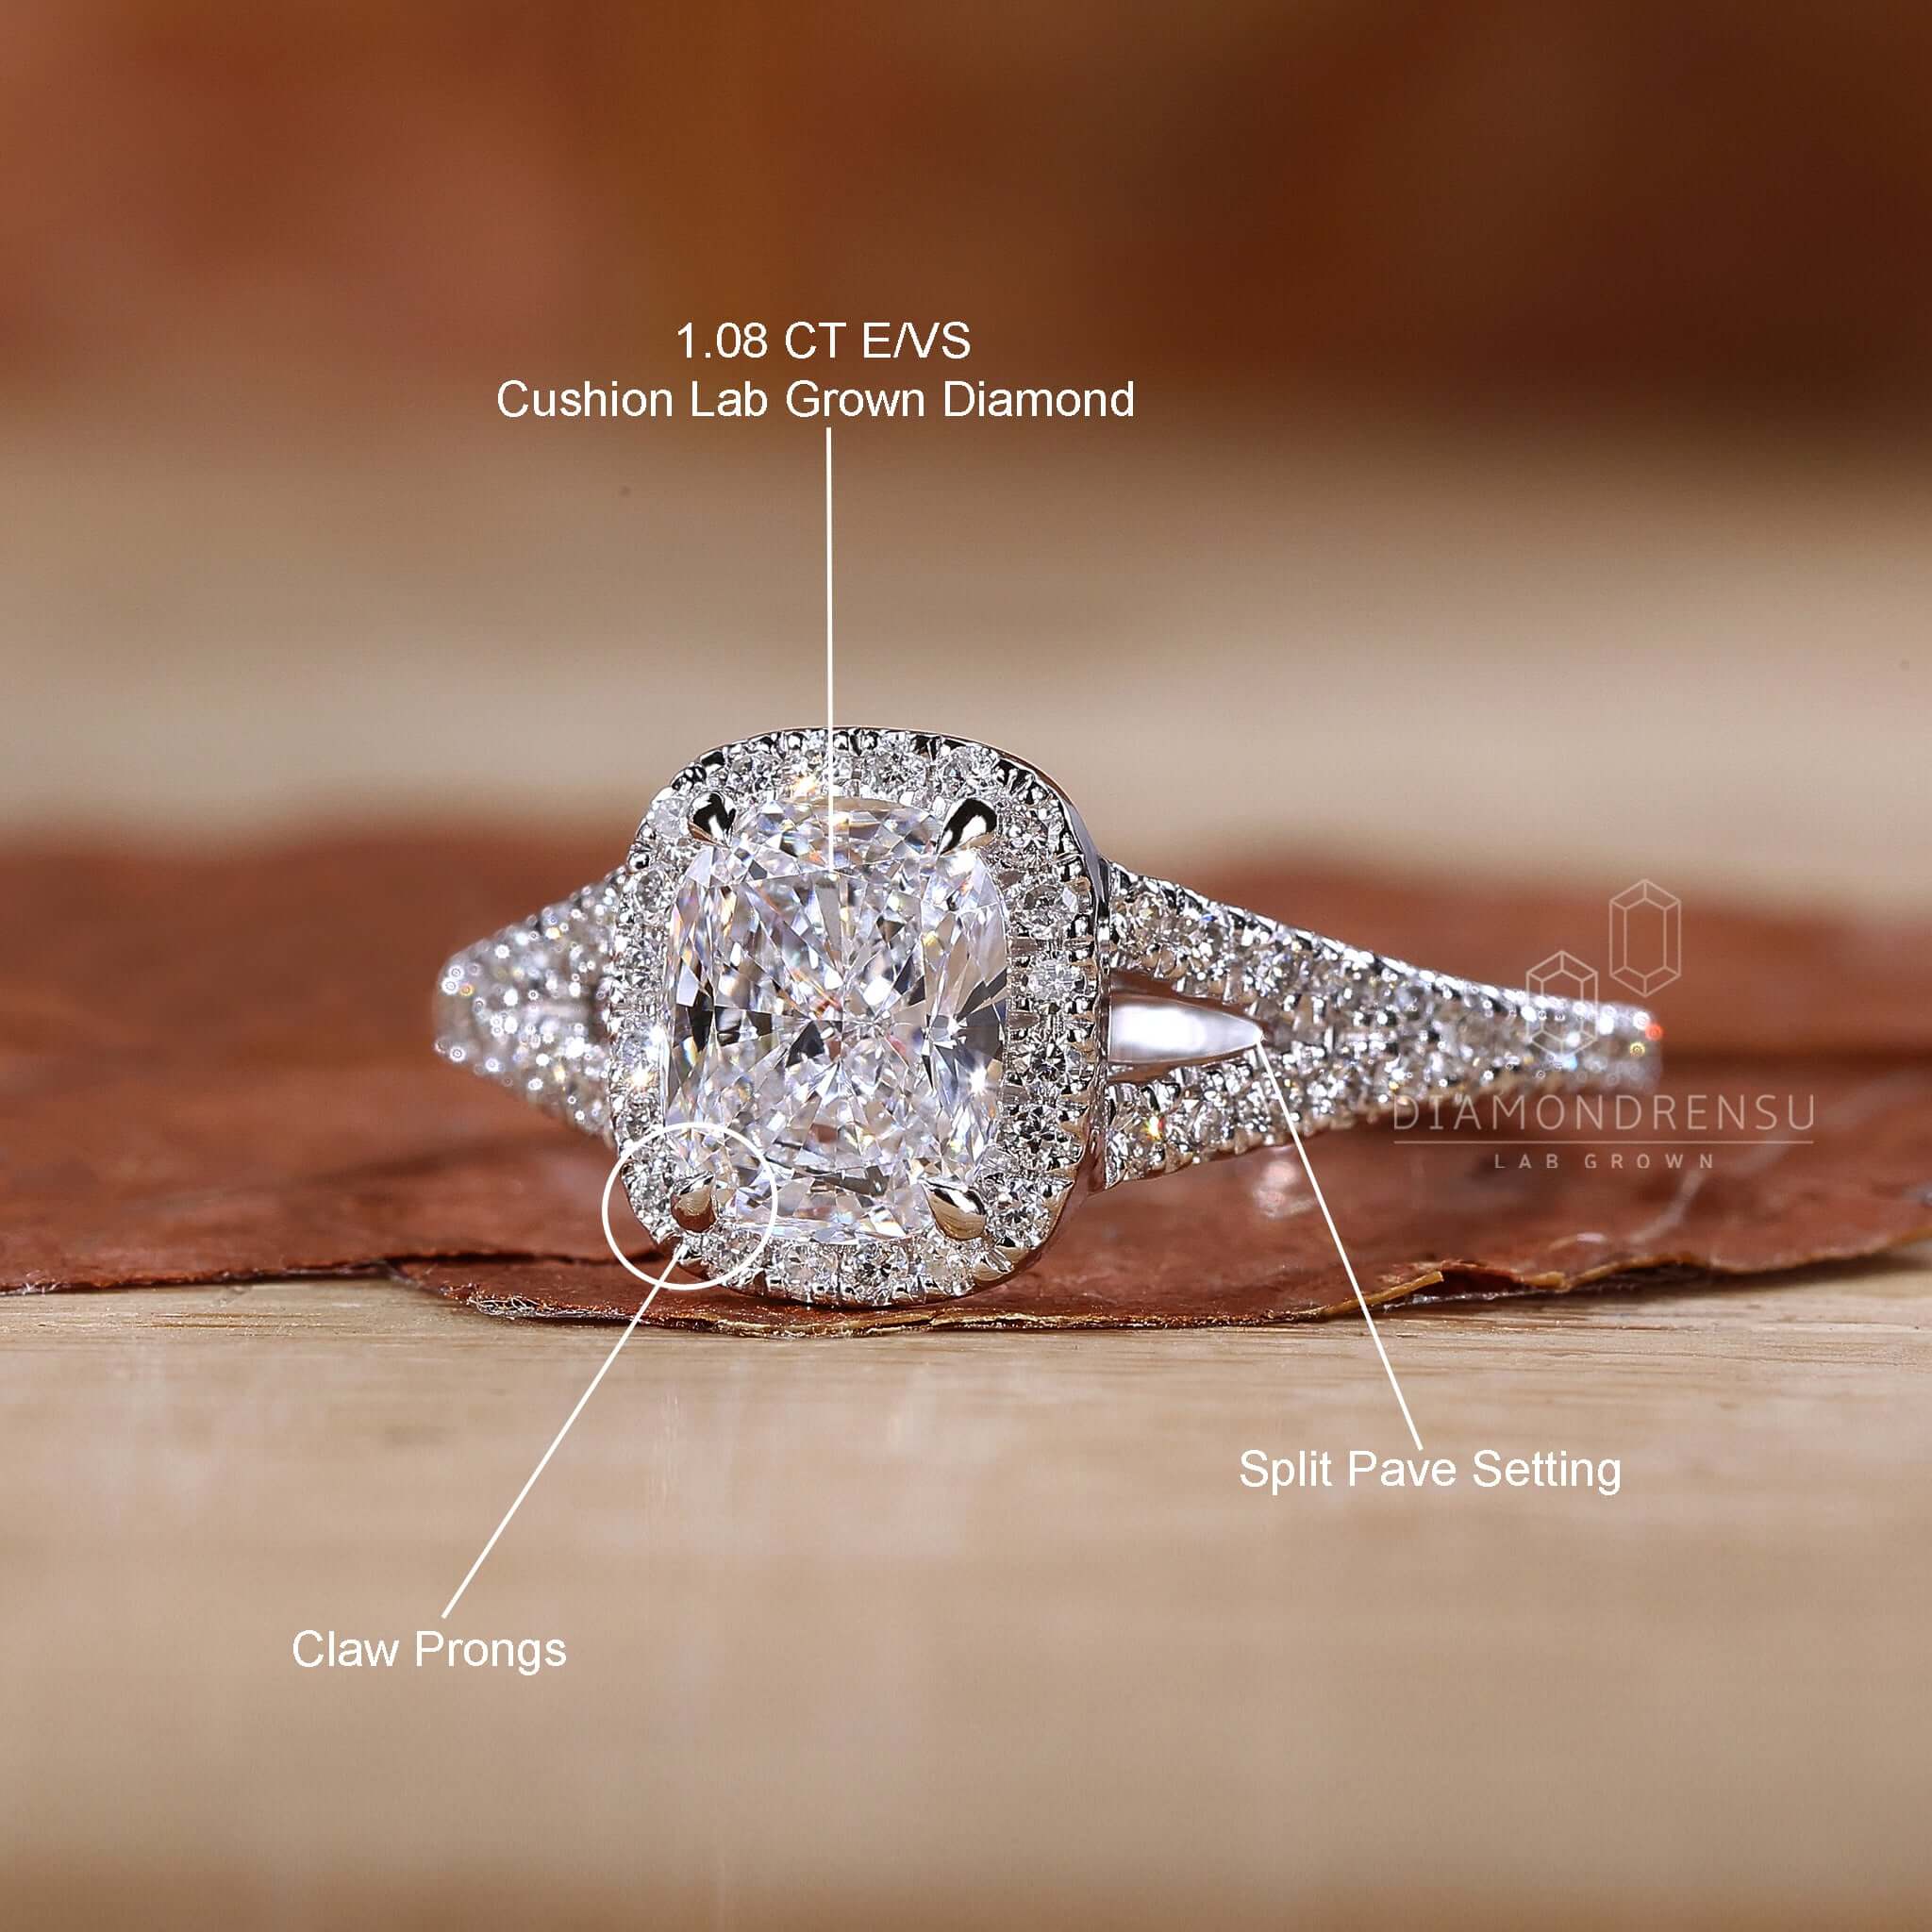 Elongated Cushion Cut Engagement Ring - Close-up